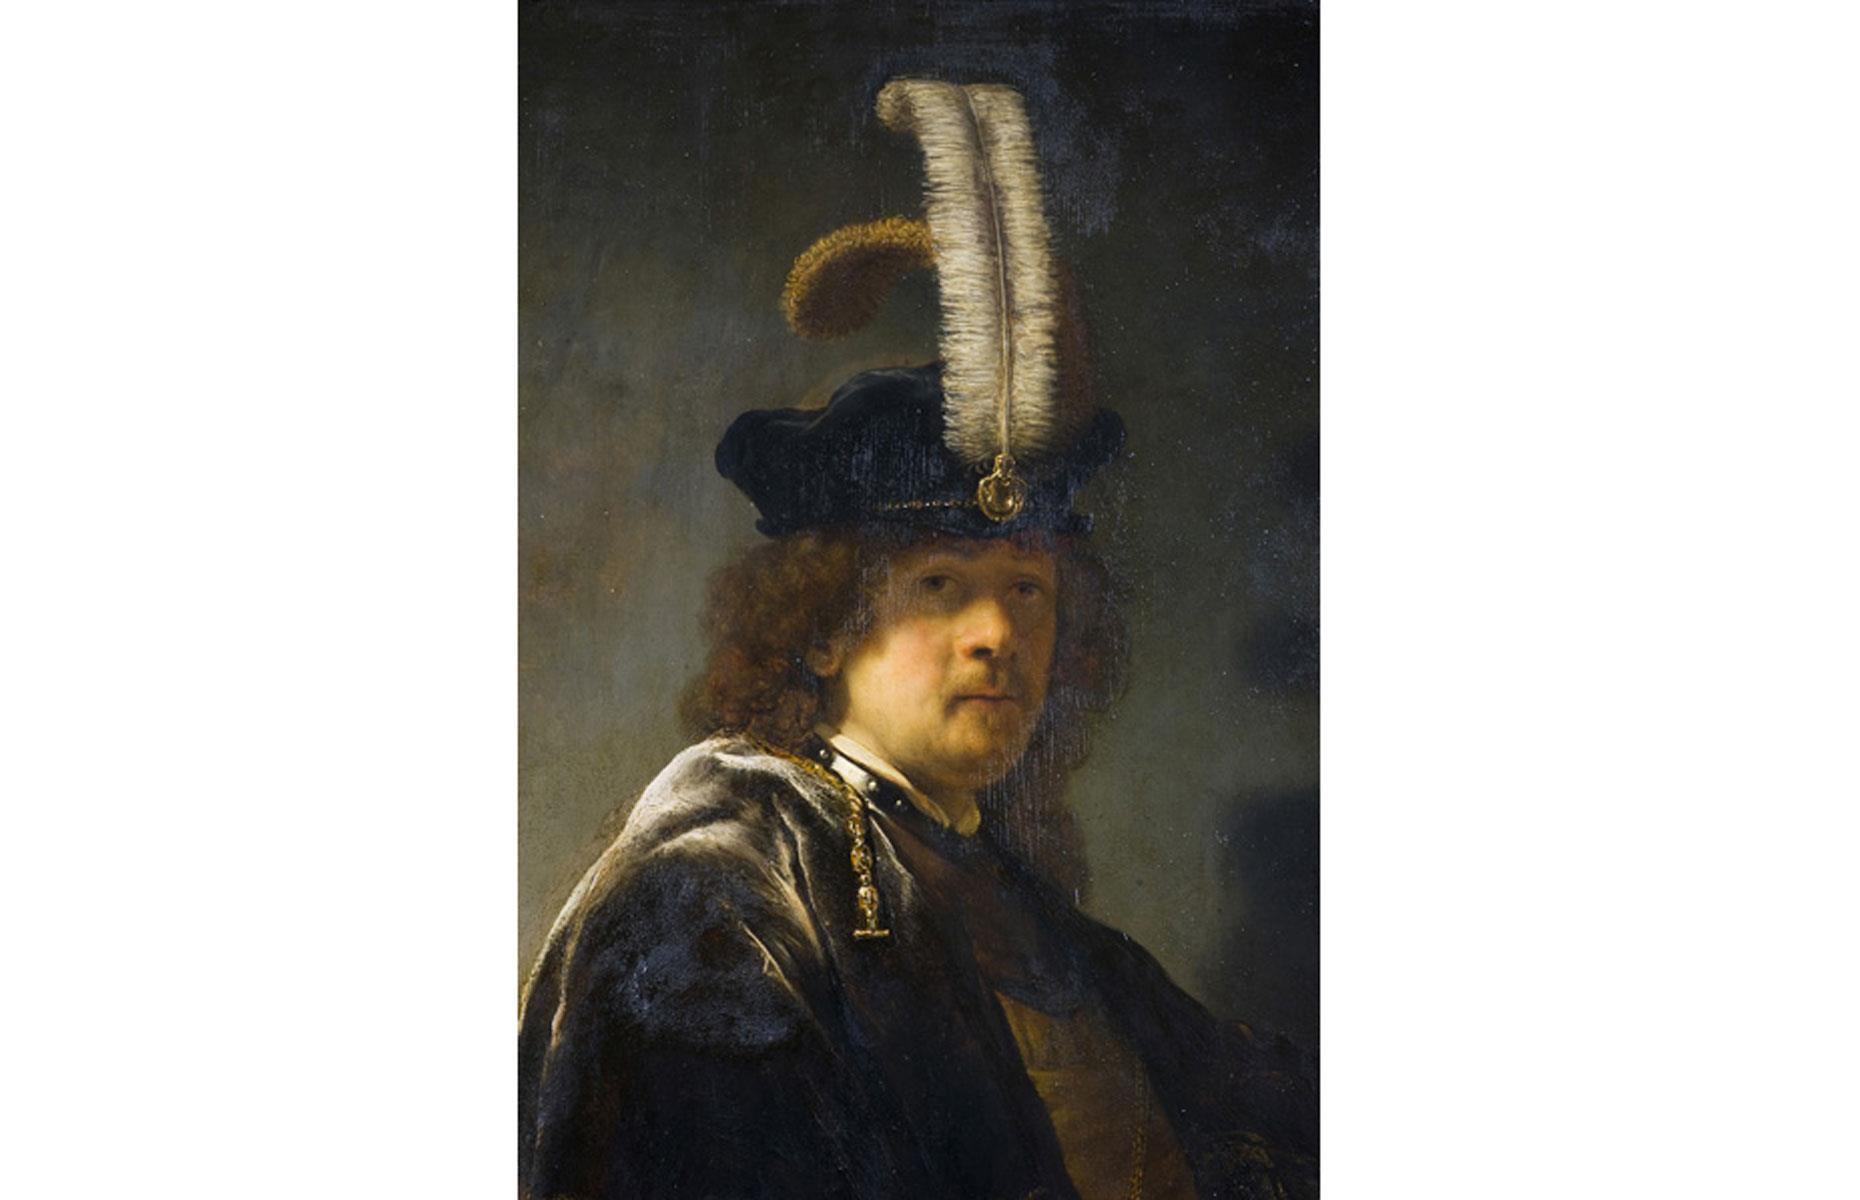 The Rembrandt self-portrait